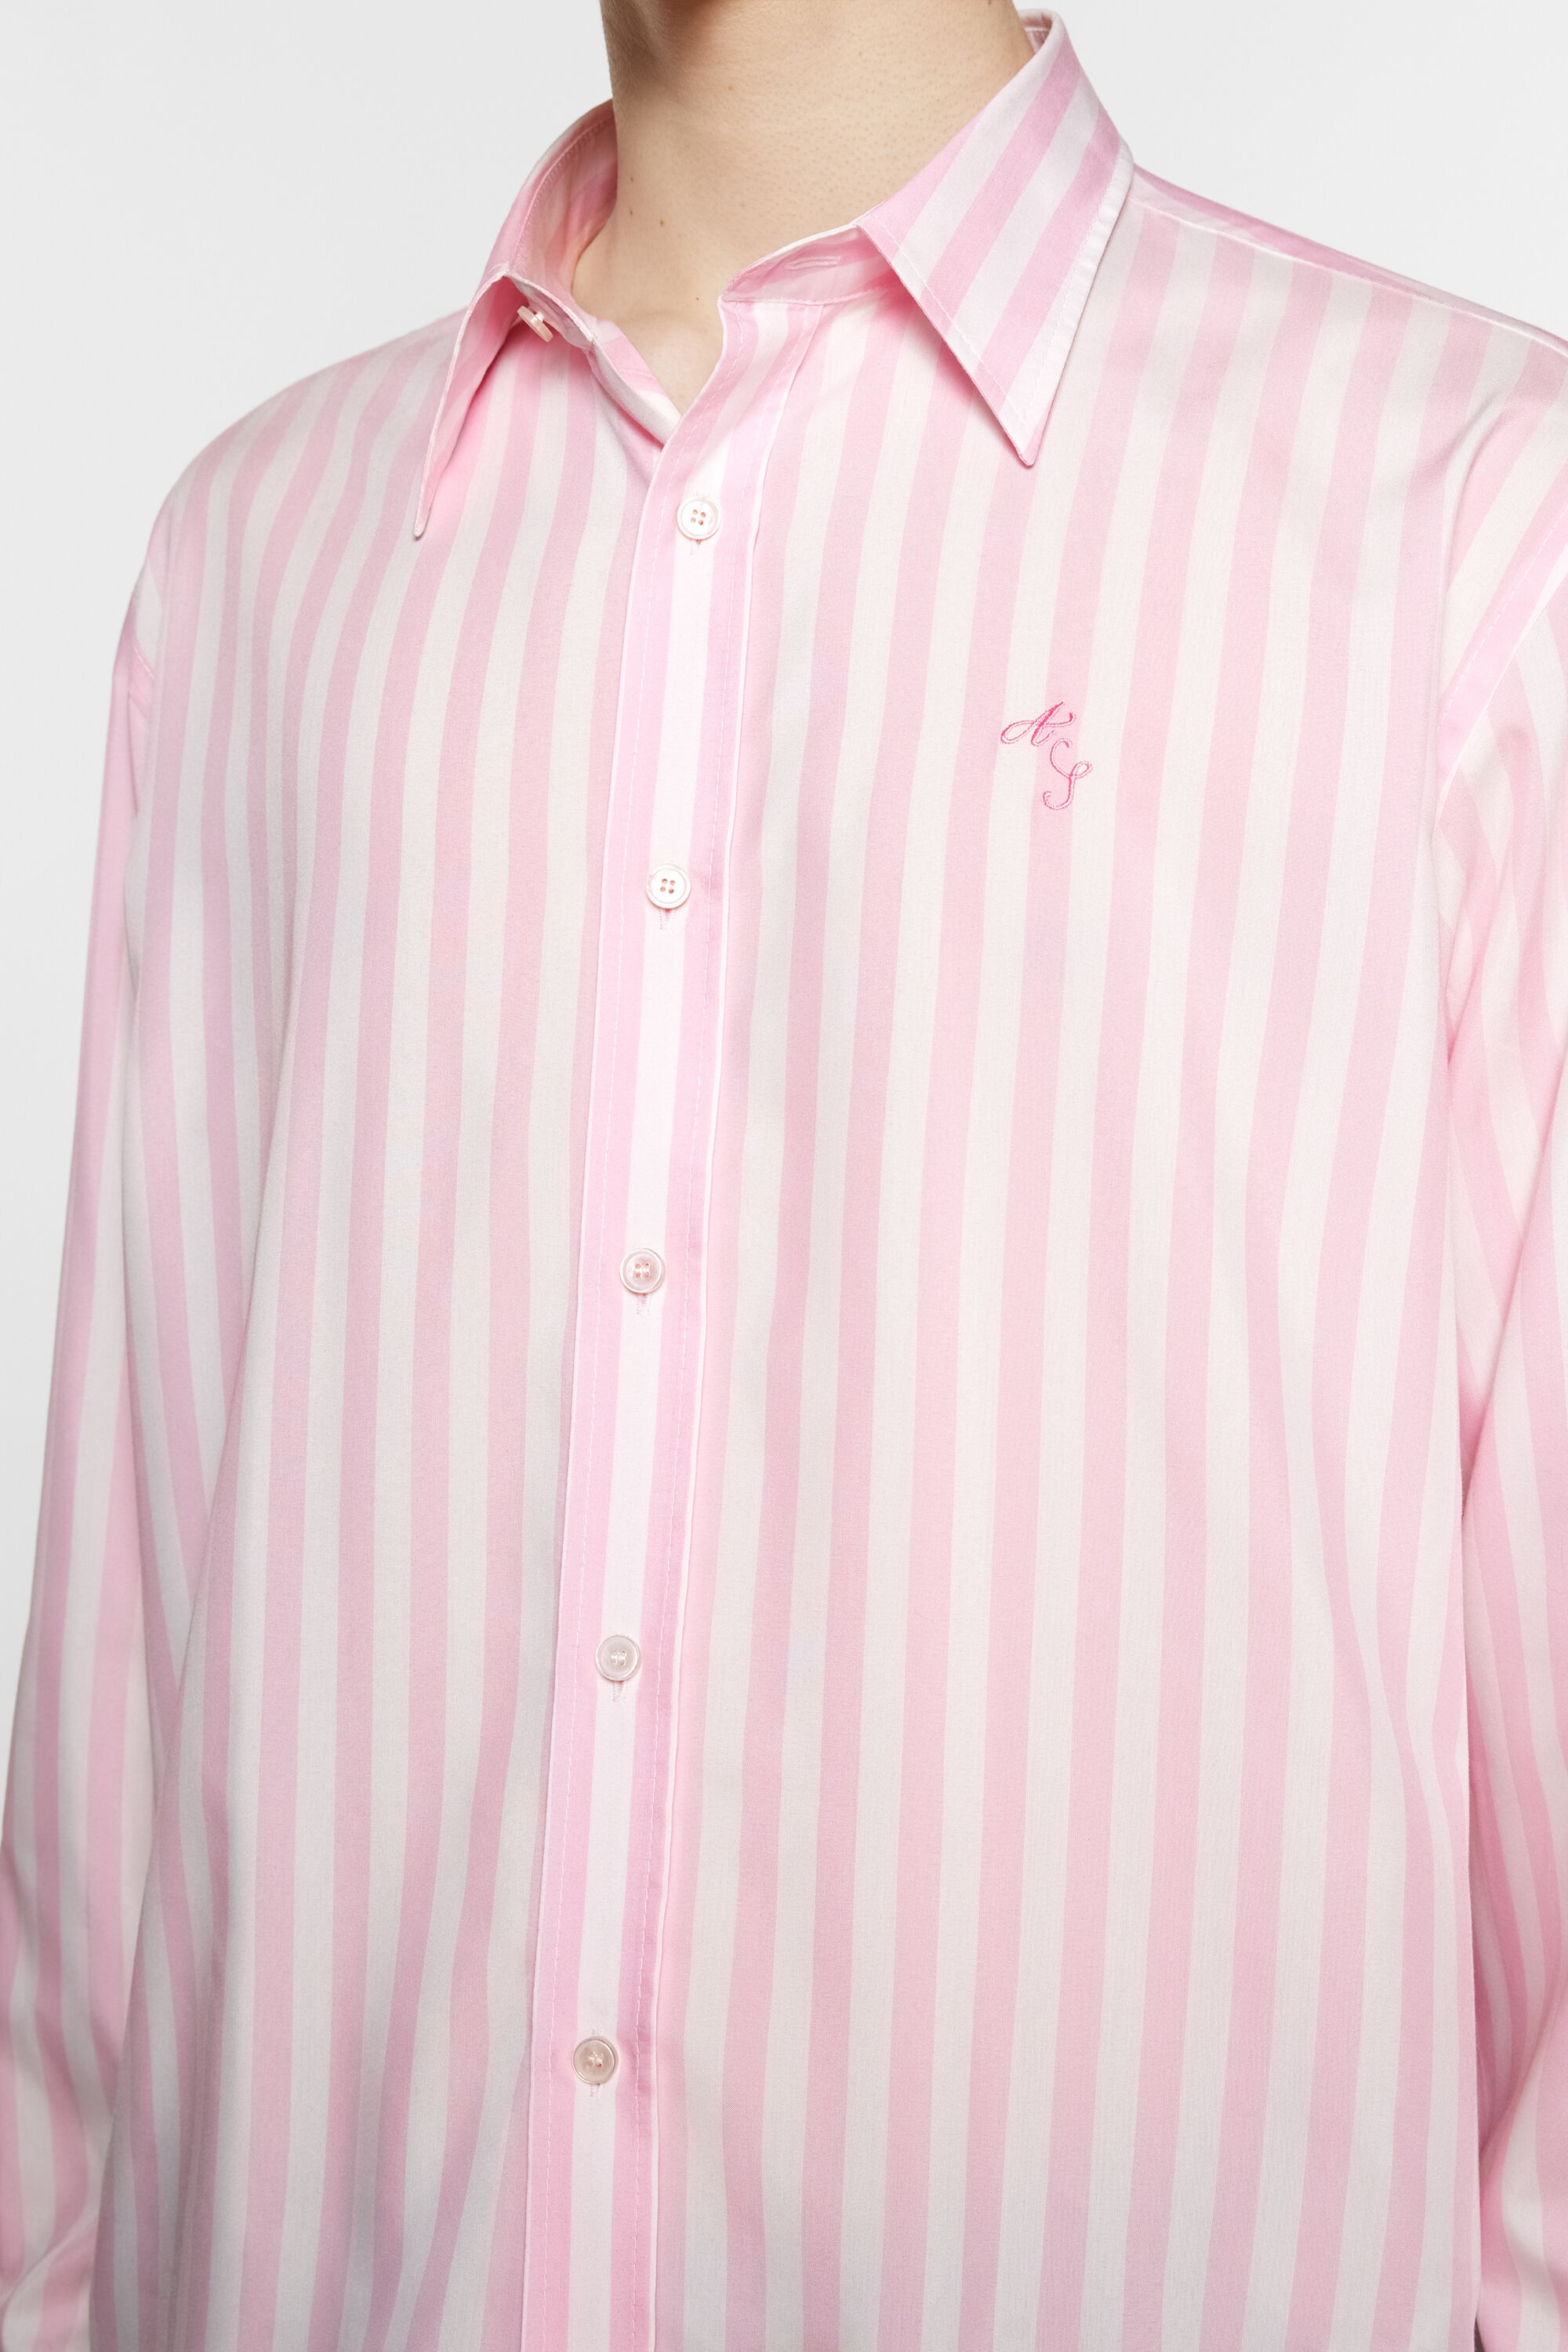 Stripe button-up shirt - Pink/white - 4